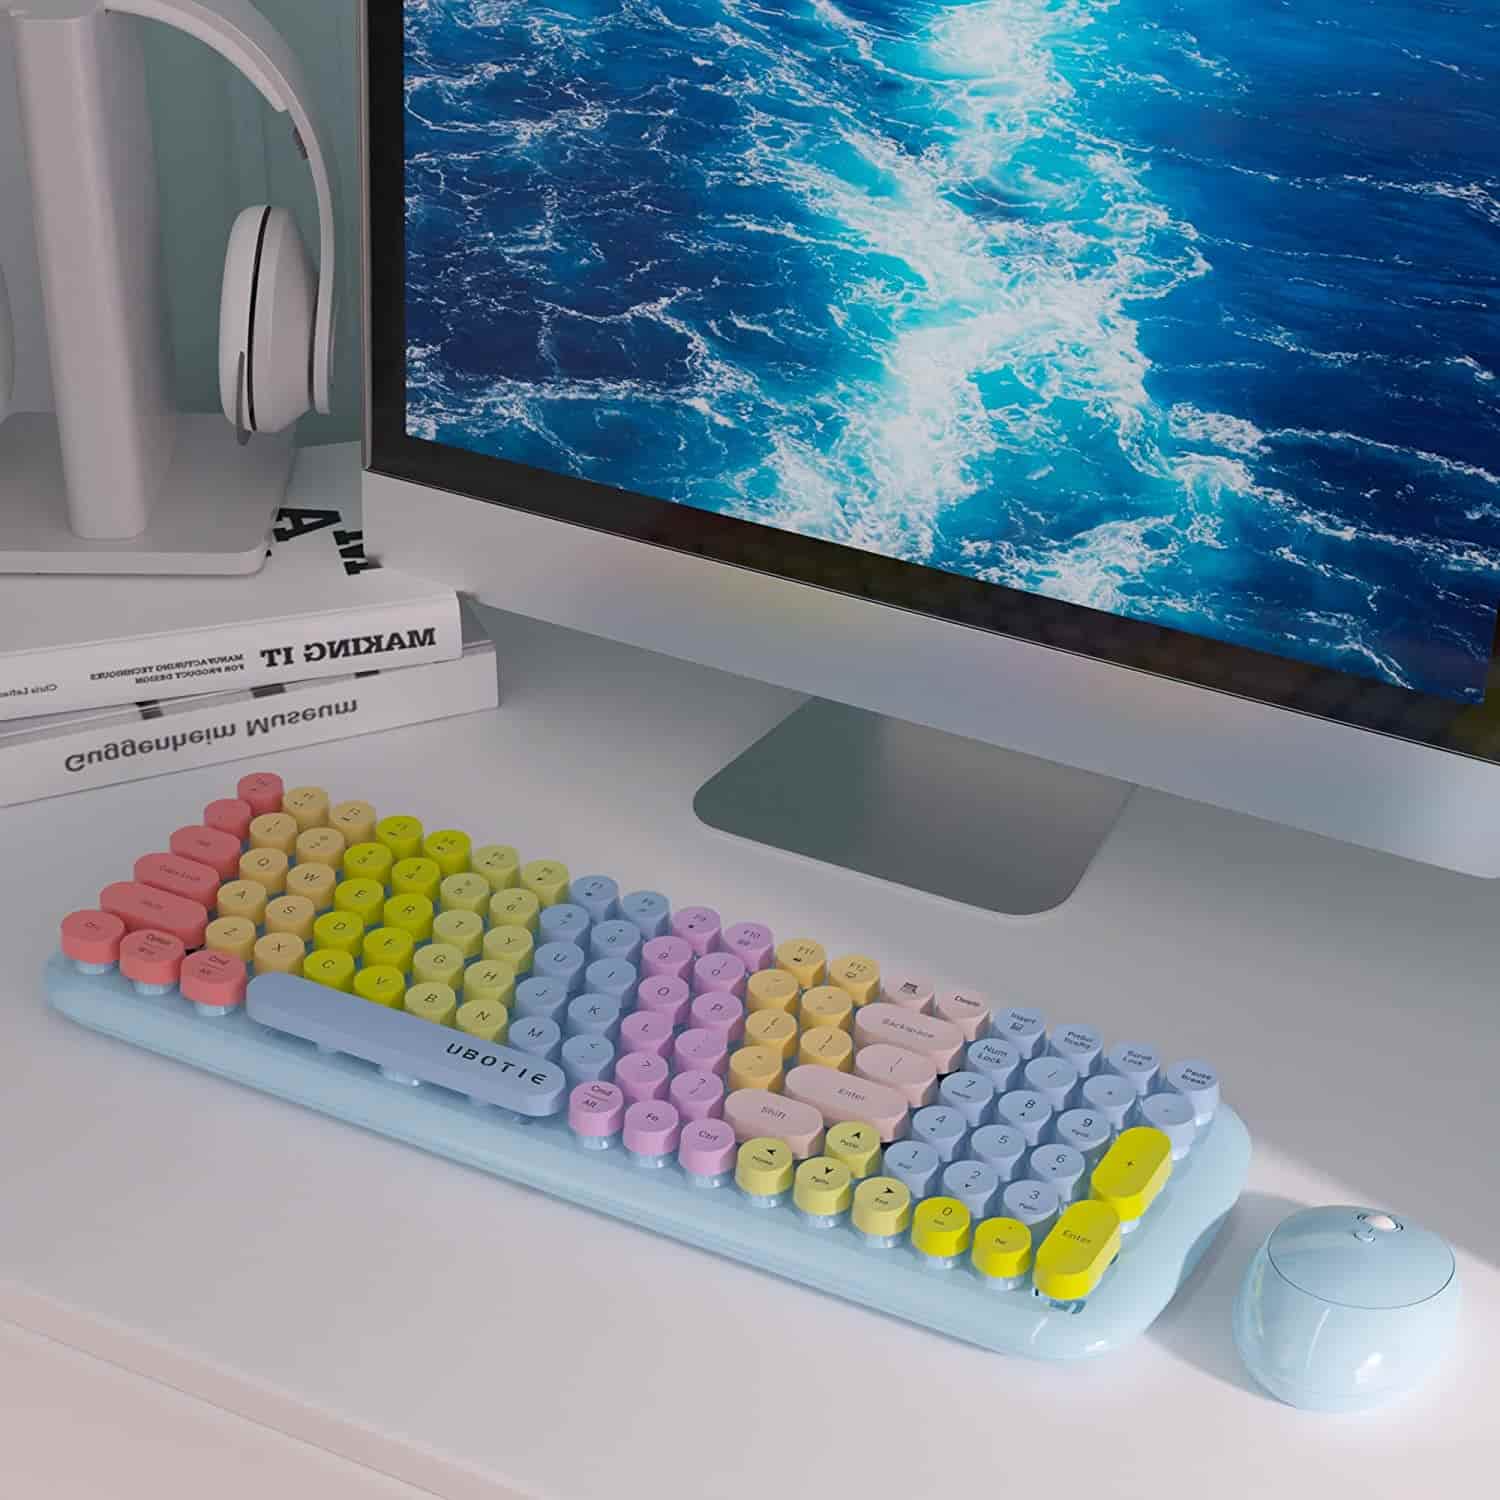 ubotie keyboard setup